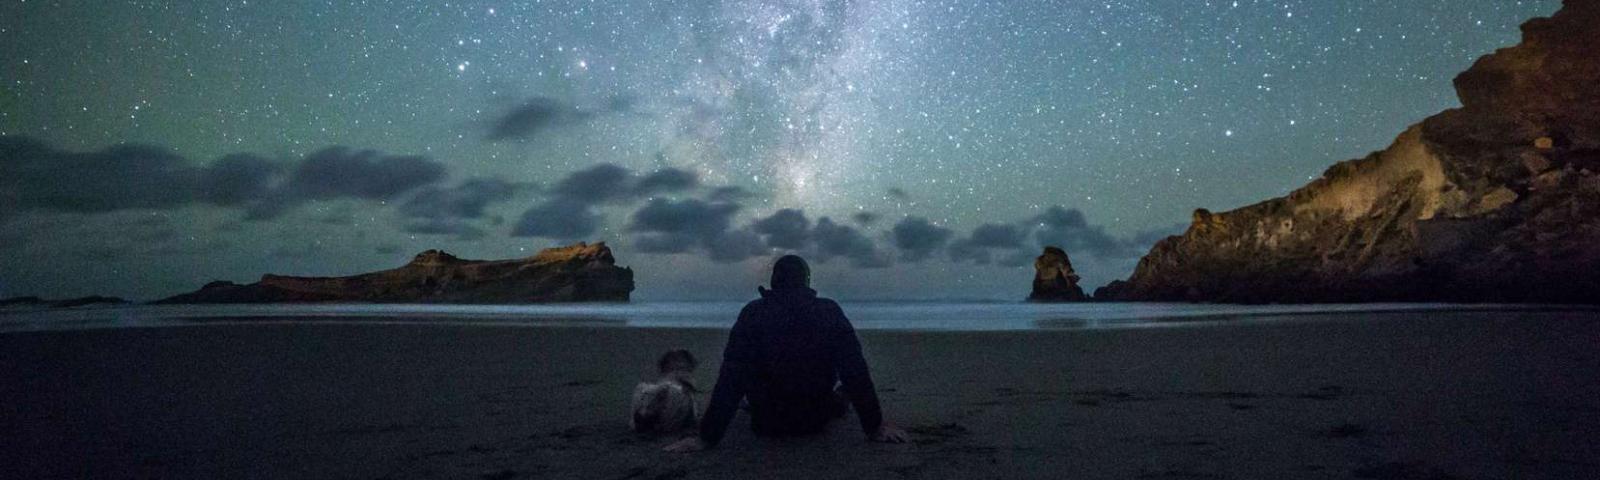 Stargazing in New Zealand – Simply Breathtaking!